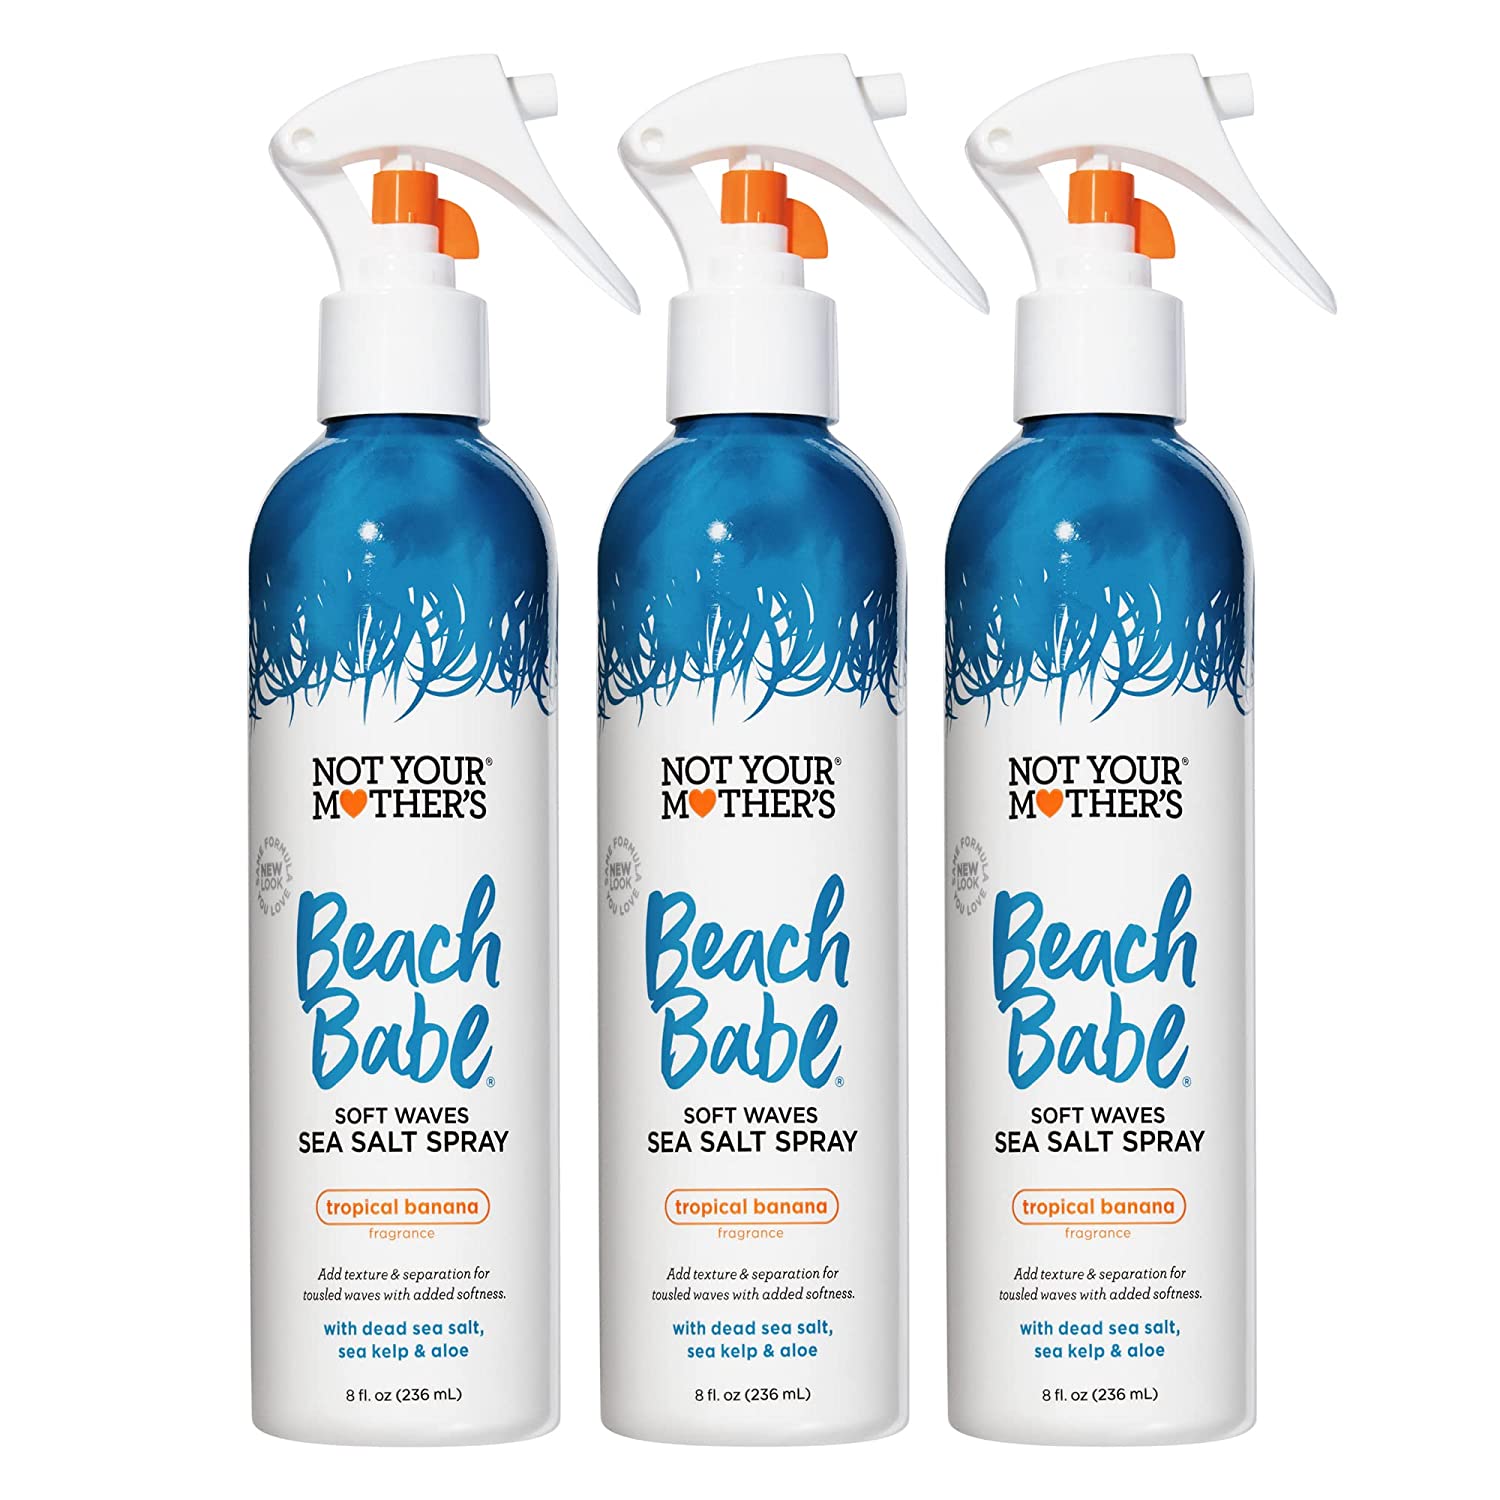 Not Your Mother's Beach Babe Soft Waves Sea Salt Spray [...]